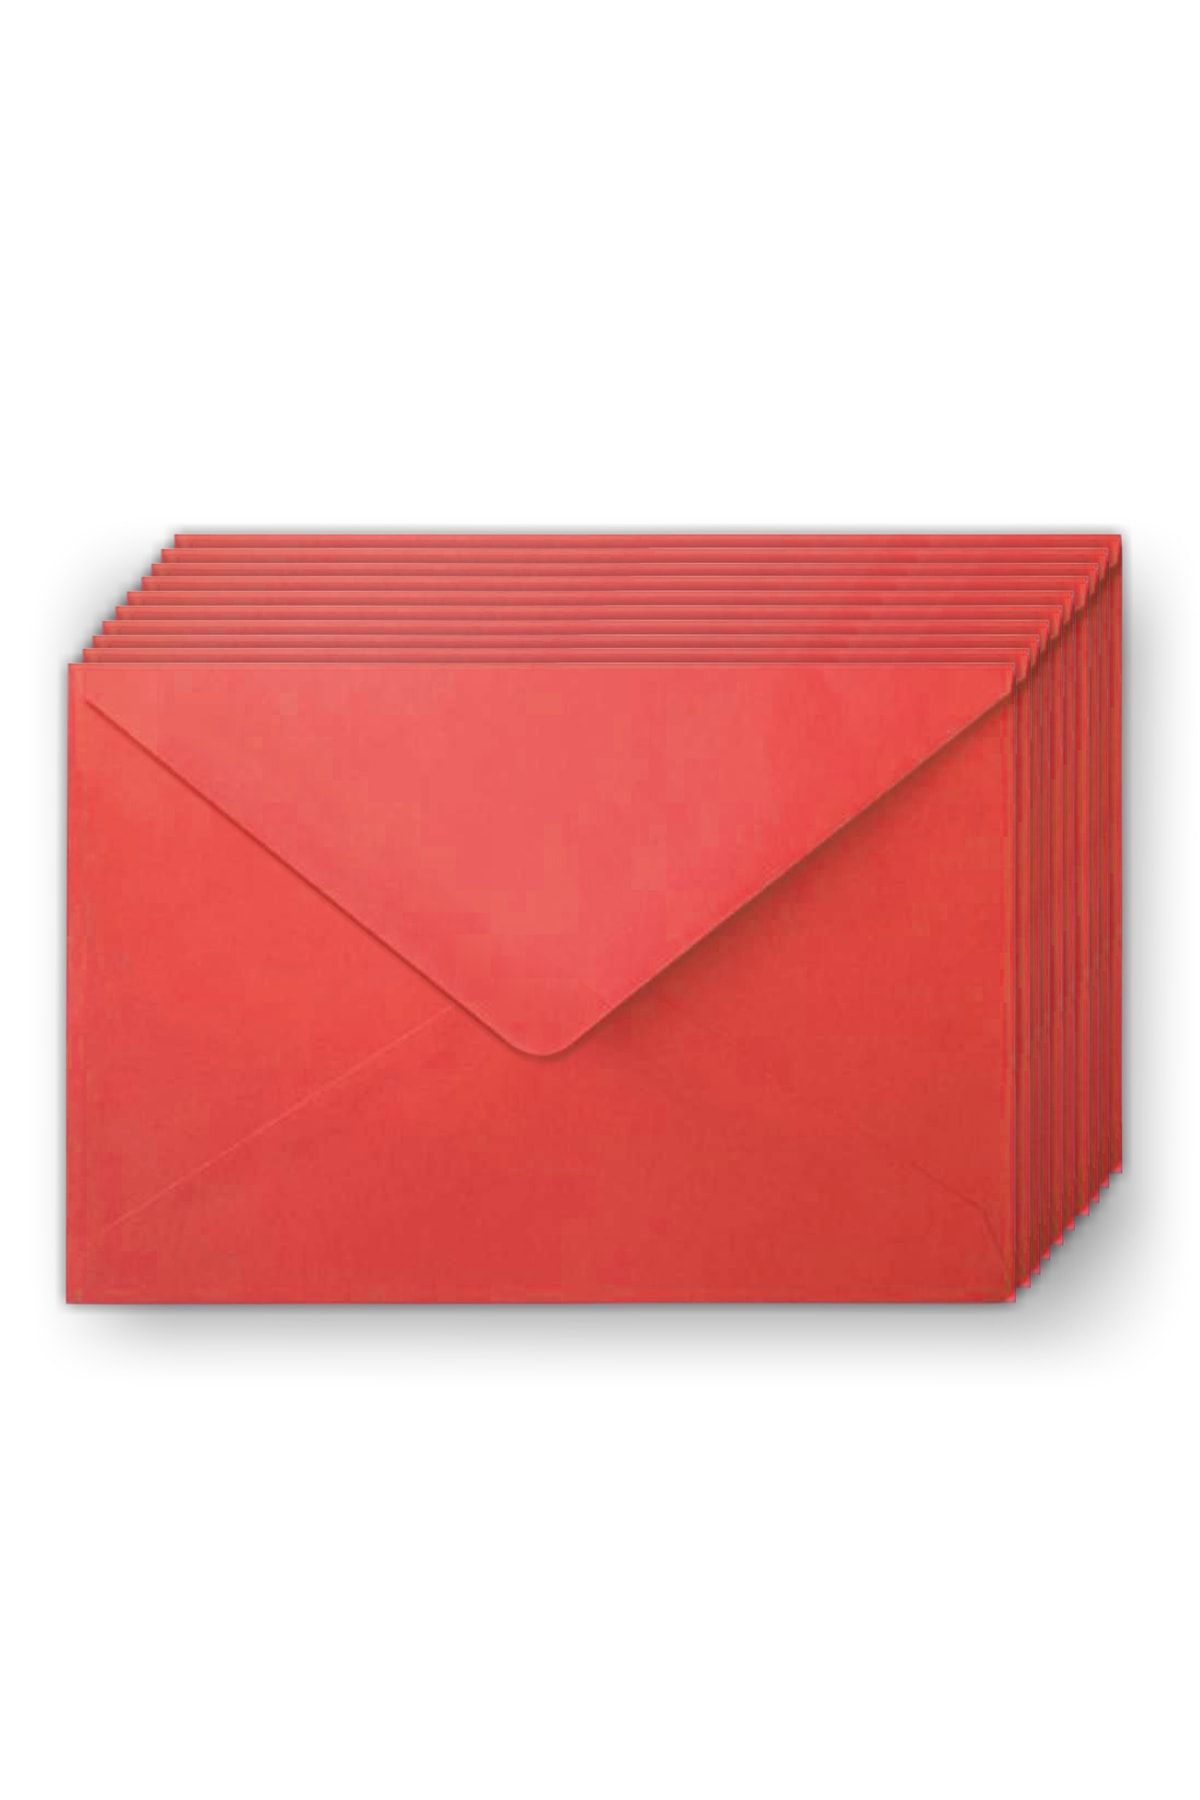 Mia Pera 10'lu Kırmızı Zarf Seti (13x18cm) Mektup Kartpostal Davetiye Zarfı